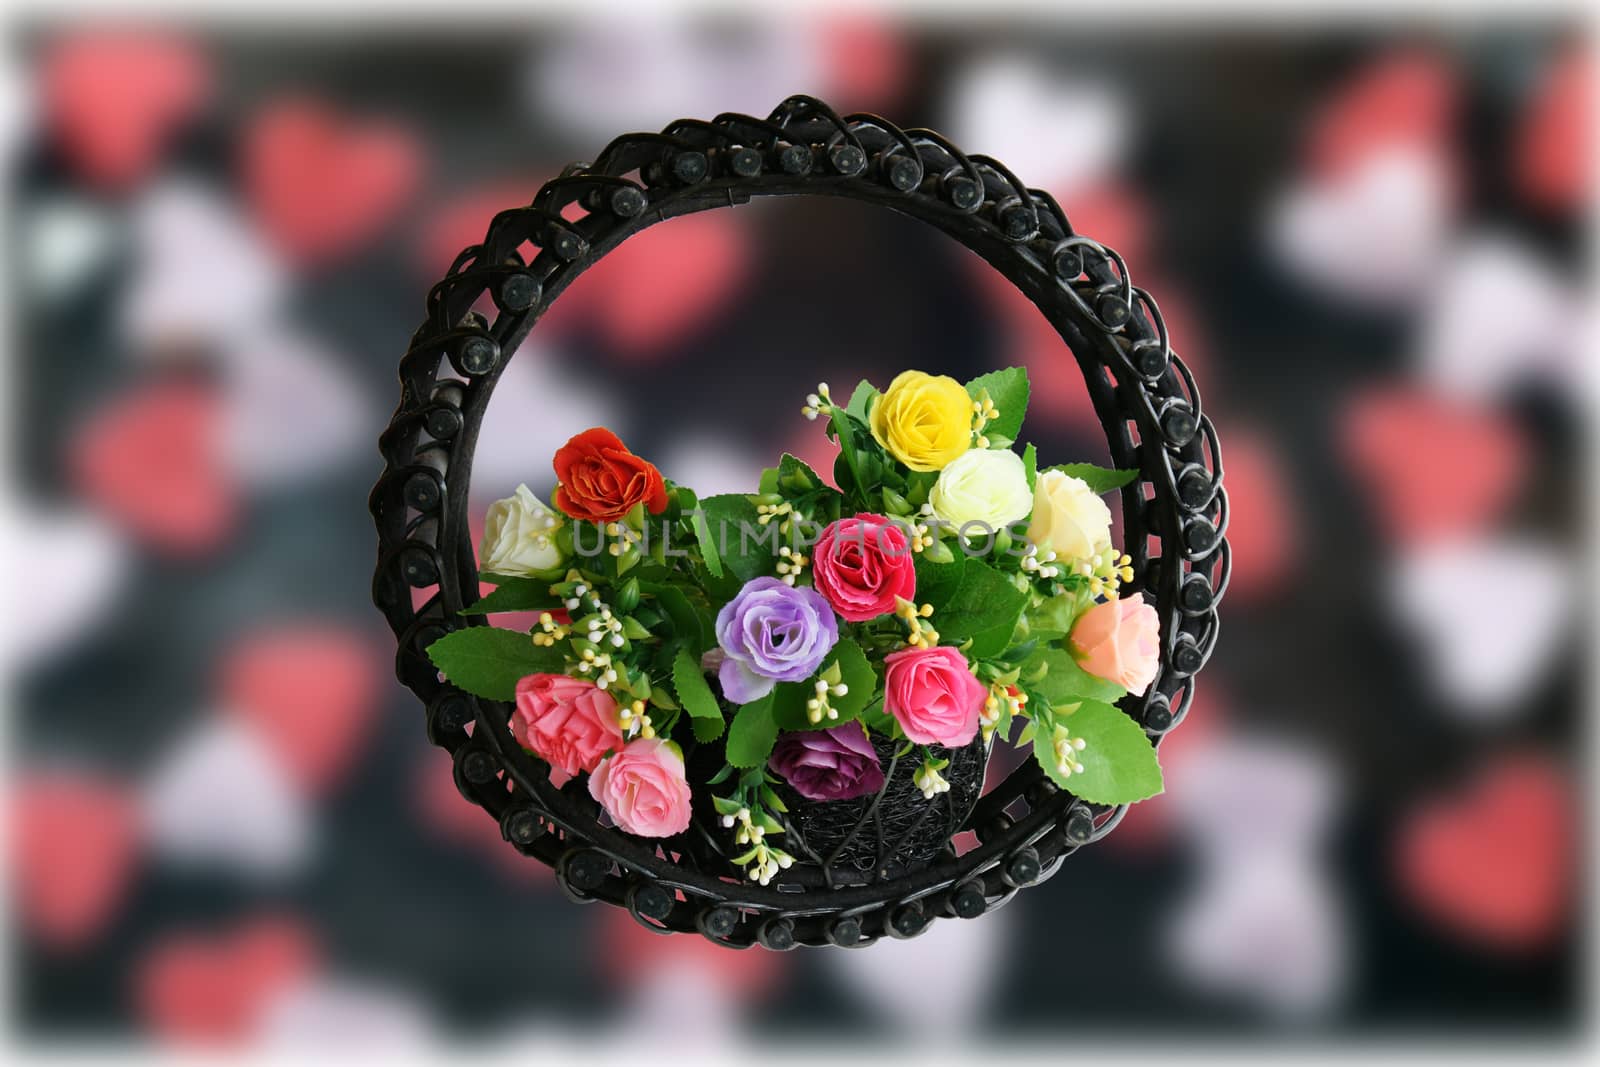 Rose basket on hearts background by mranucha